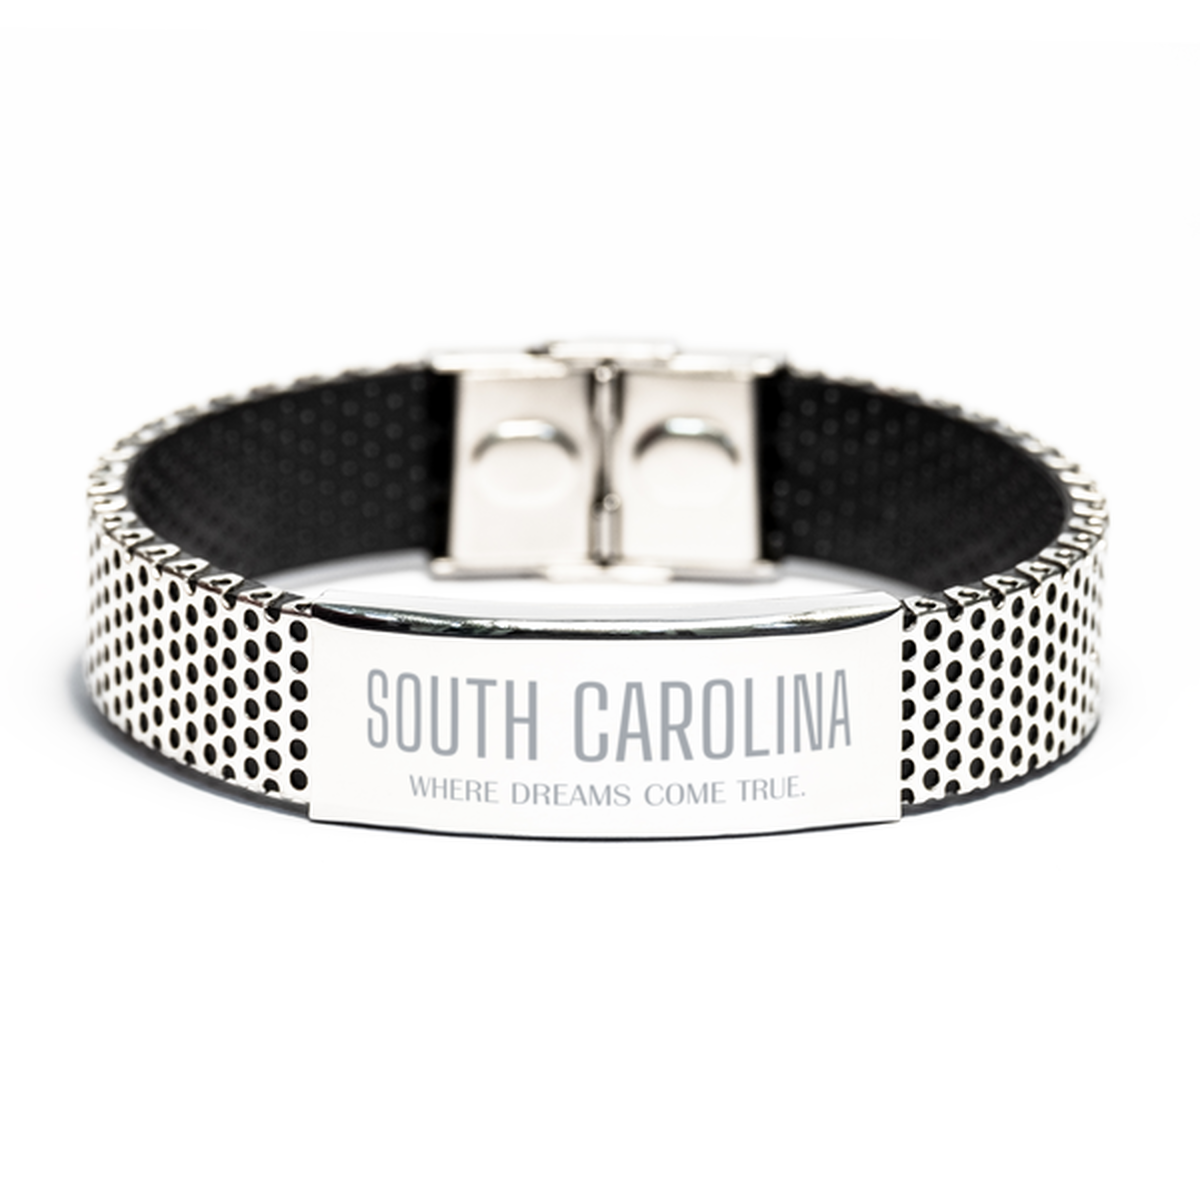 Love South Carolina State Stainless Steel Bracelet, South Carolina Where dreams come true, Birthday Inspirational Gifts For South Carolina Men, Women, Friends